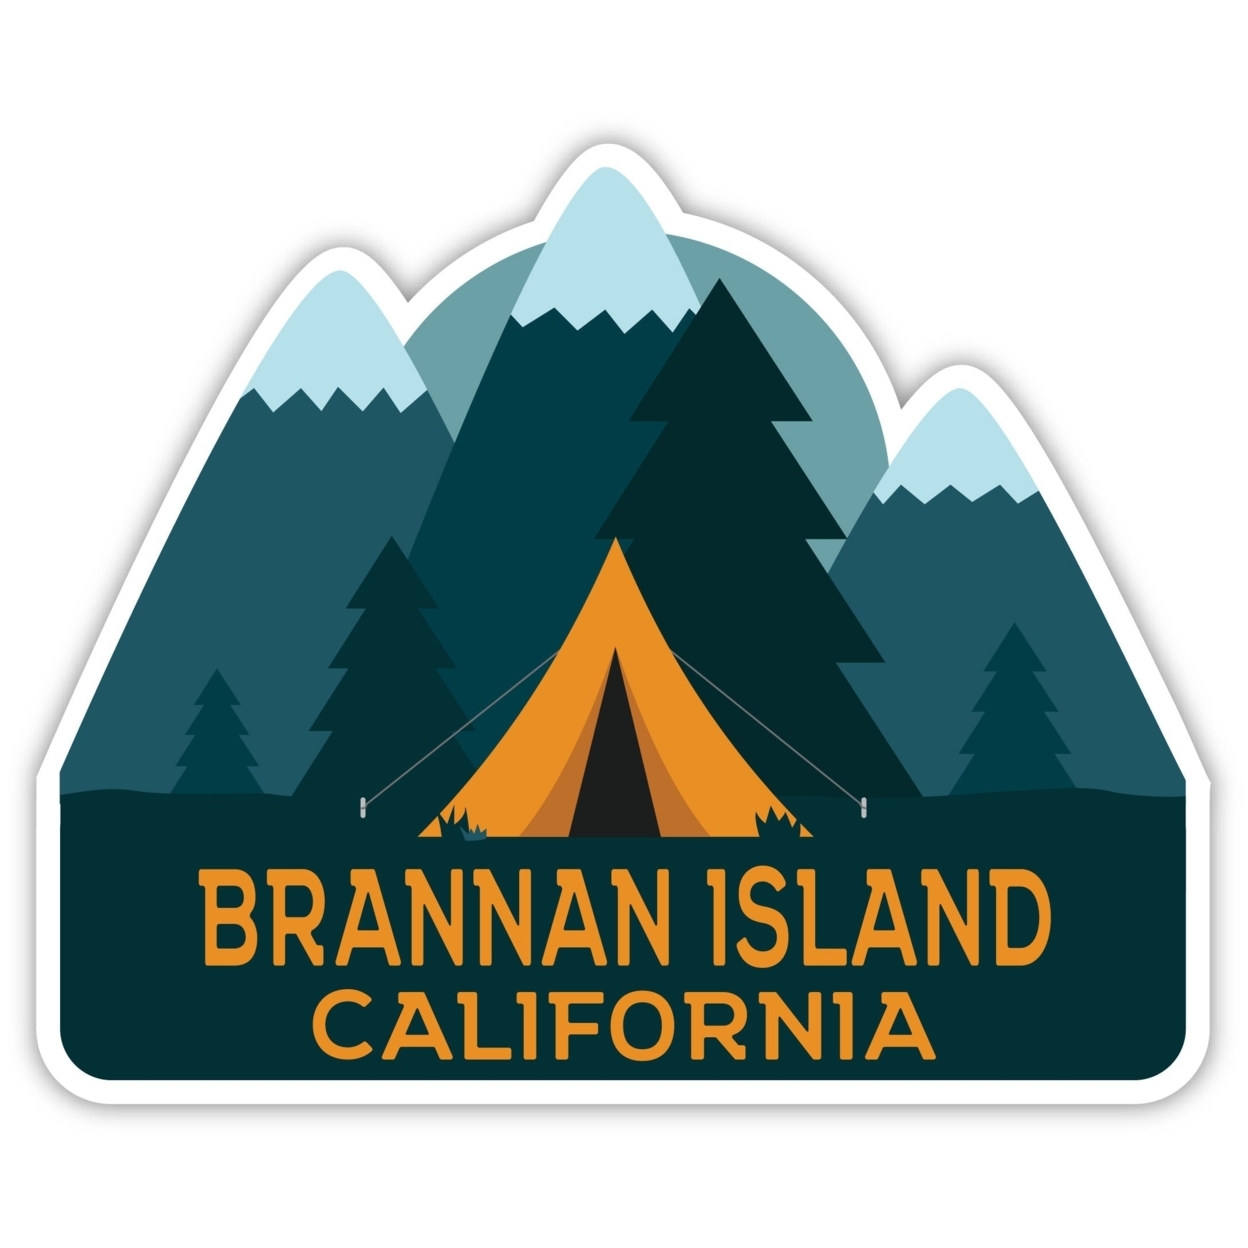 Brannan Island California Souvenir Decorative Stickers (Choose Theme And Size) - Single Unit, 8-Inch, Adventures Awaits